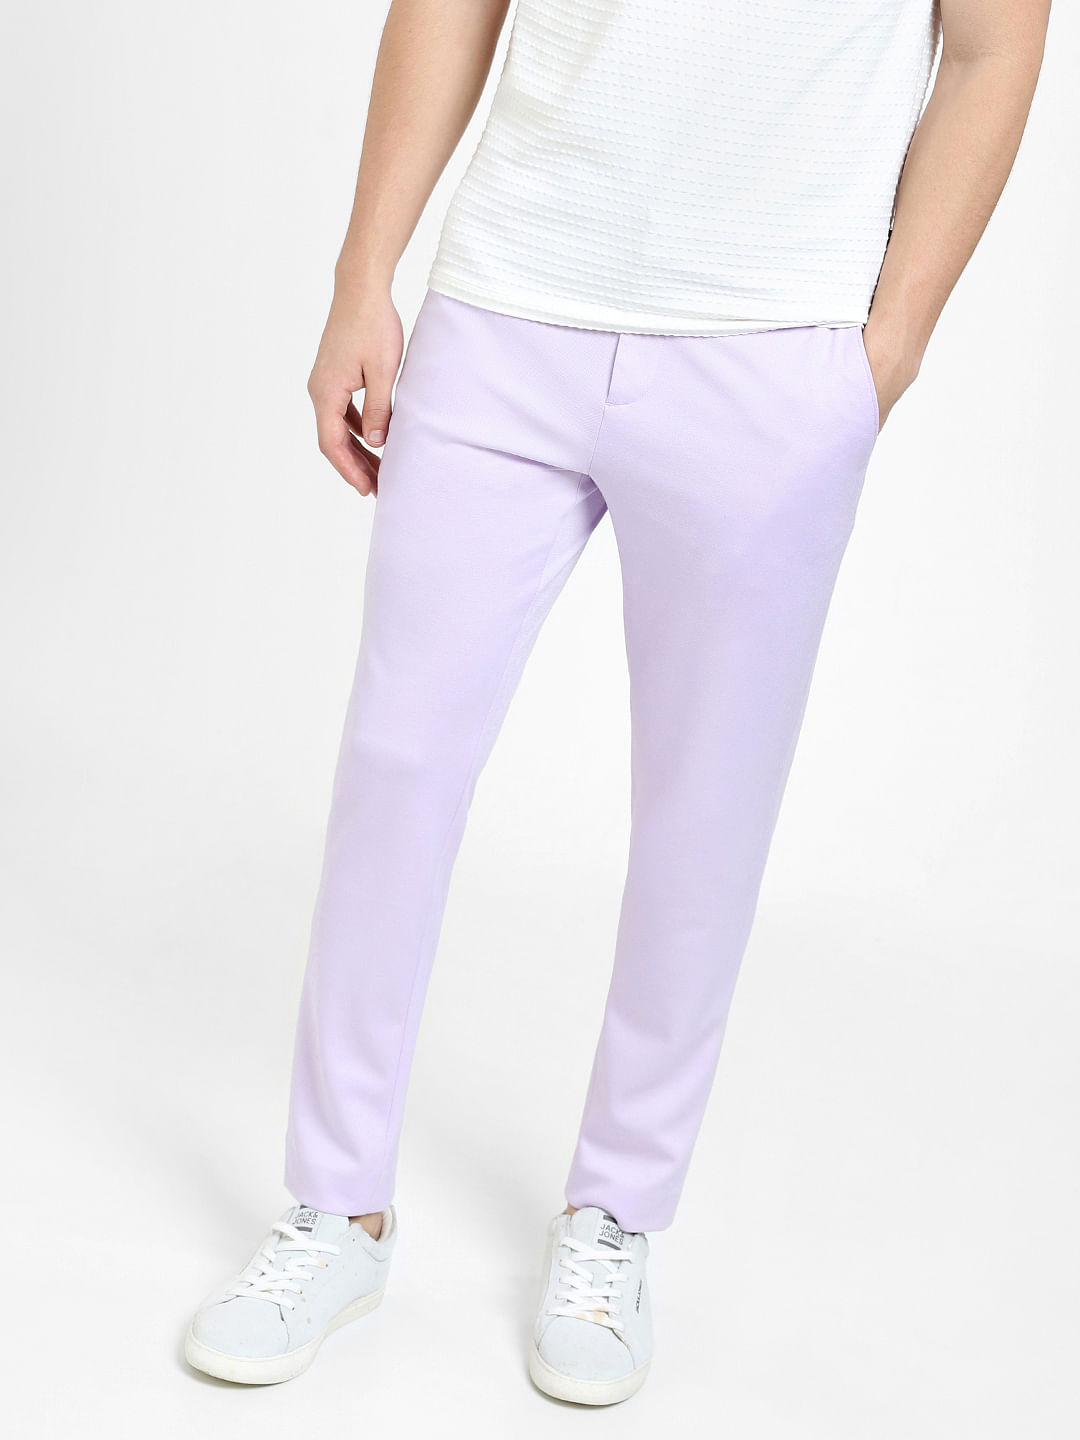 RAREISM Trousers and Pants  Buy RAREISM Evanova Purple Trouser Online   Nykaa Fashion